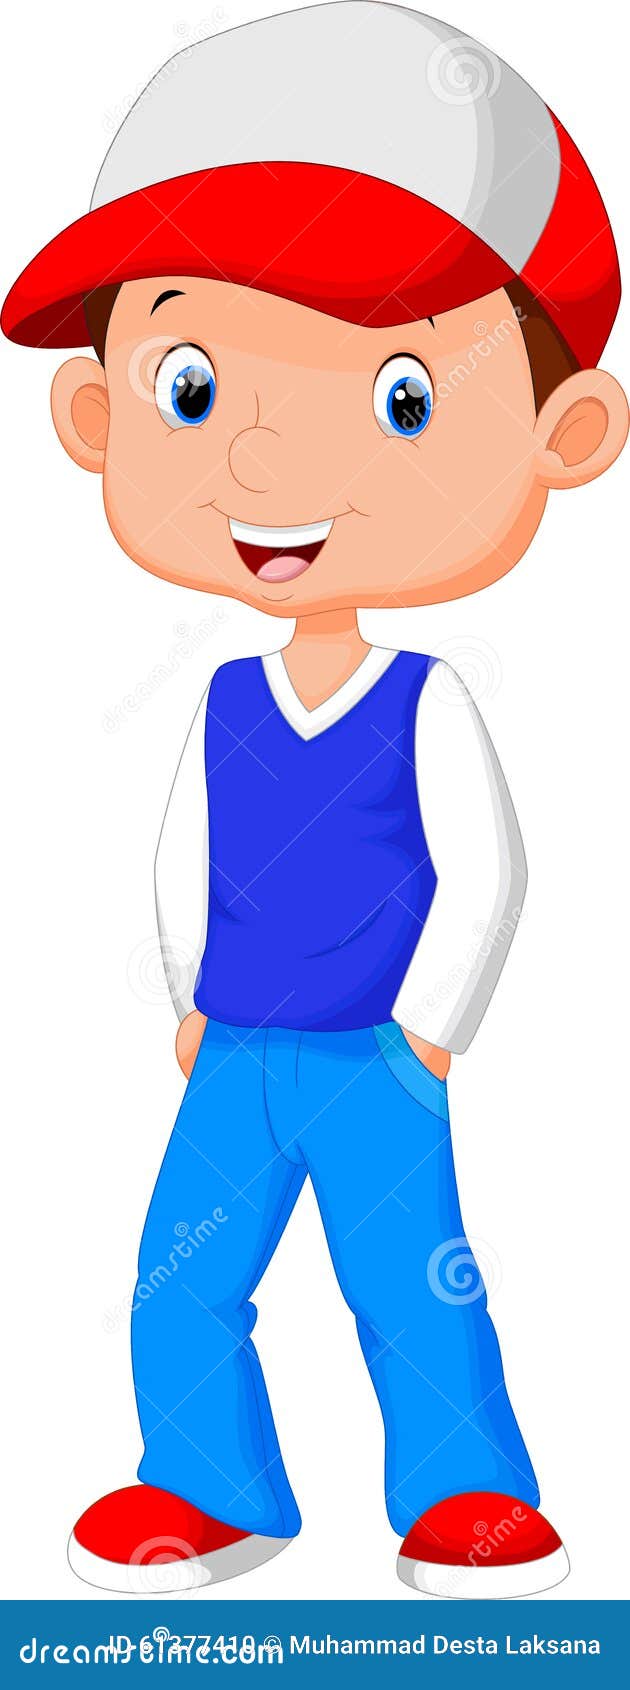 Cartoon boy wearing a hat stock illustration. Illustration of kids -  61377410